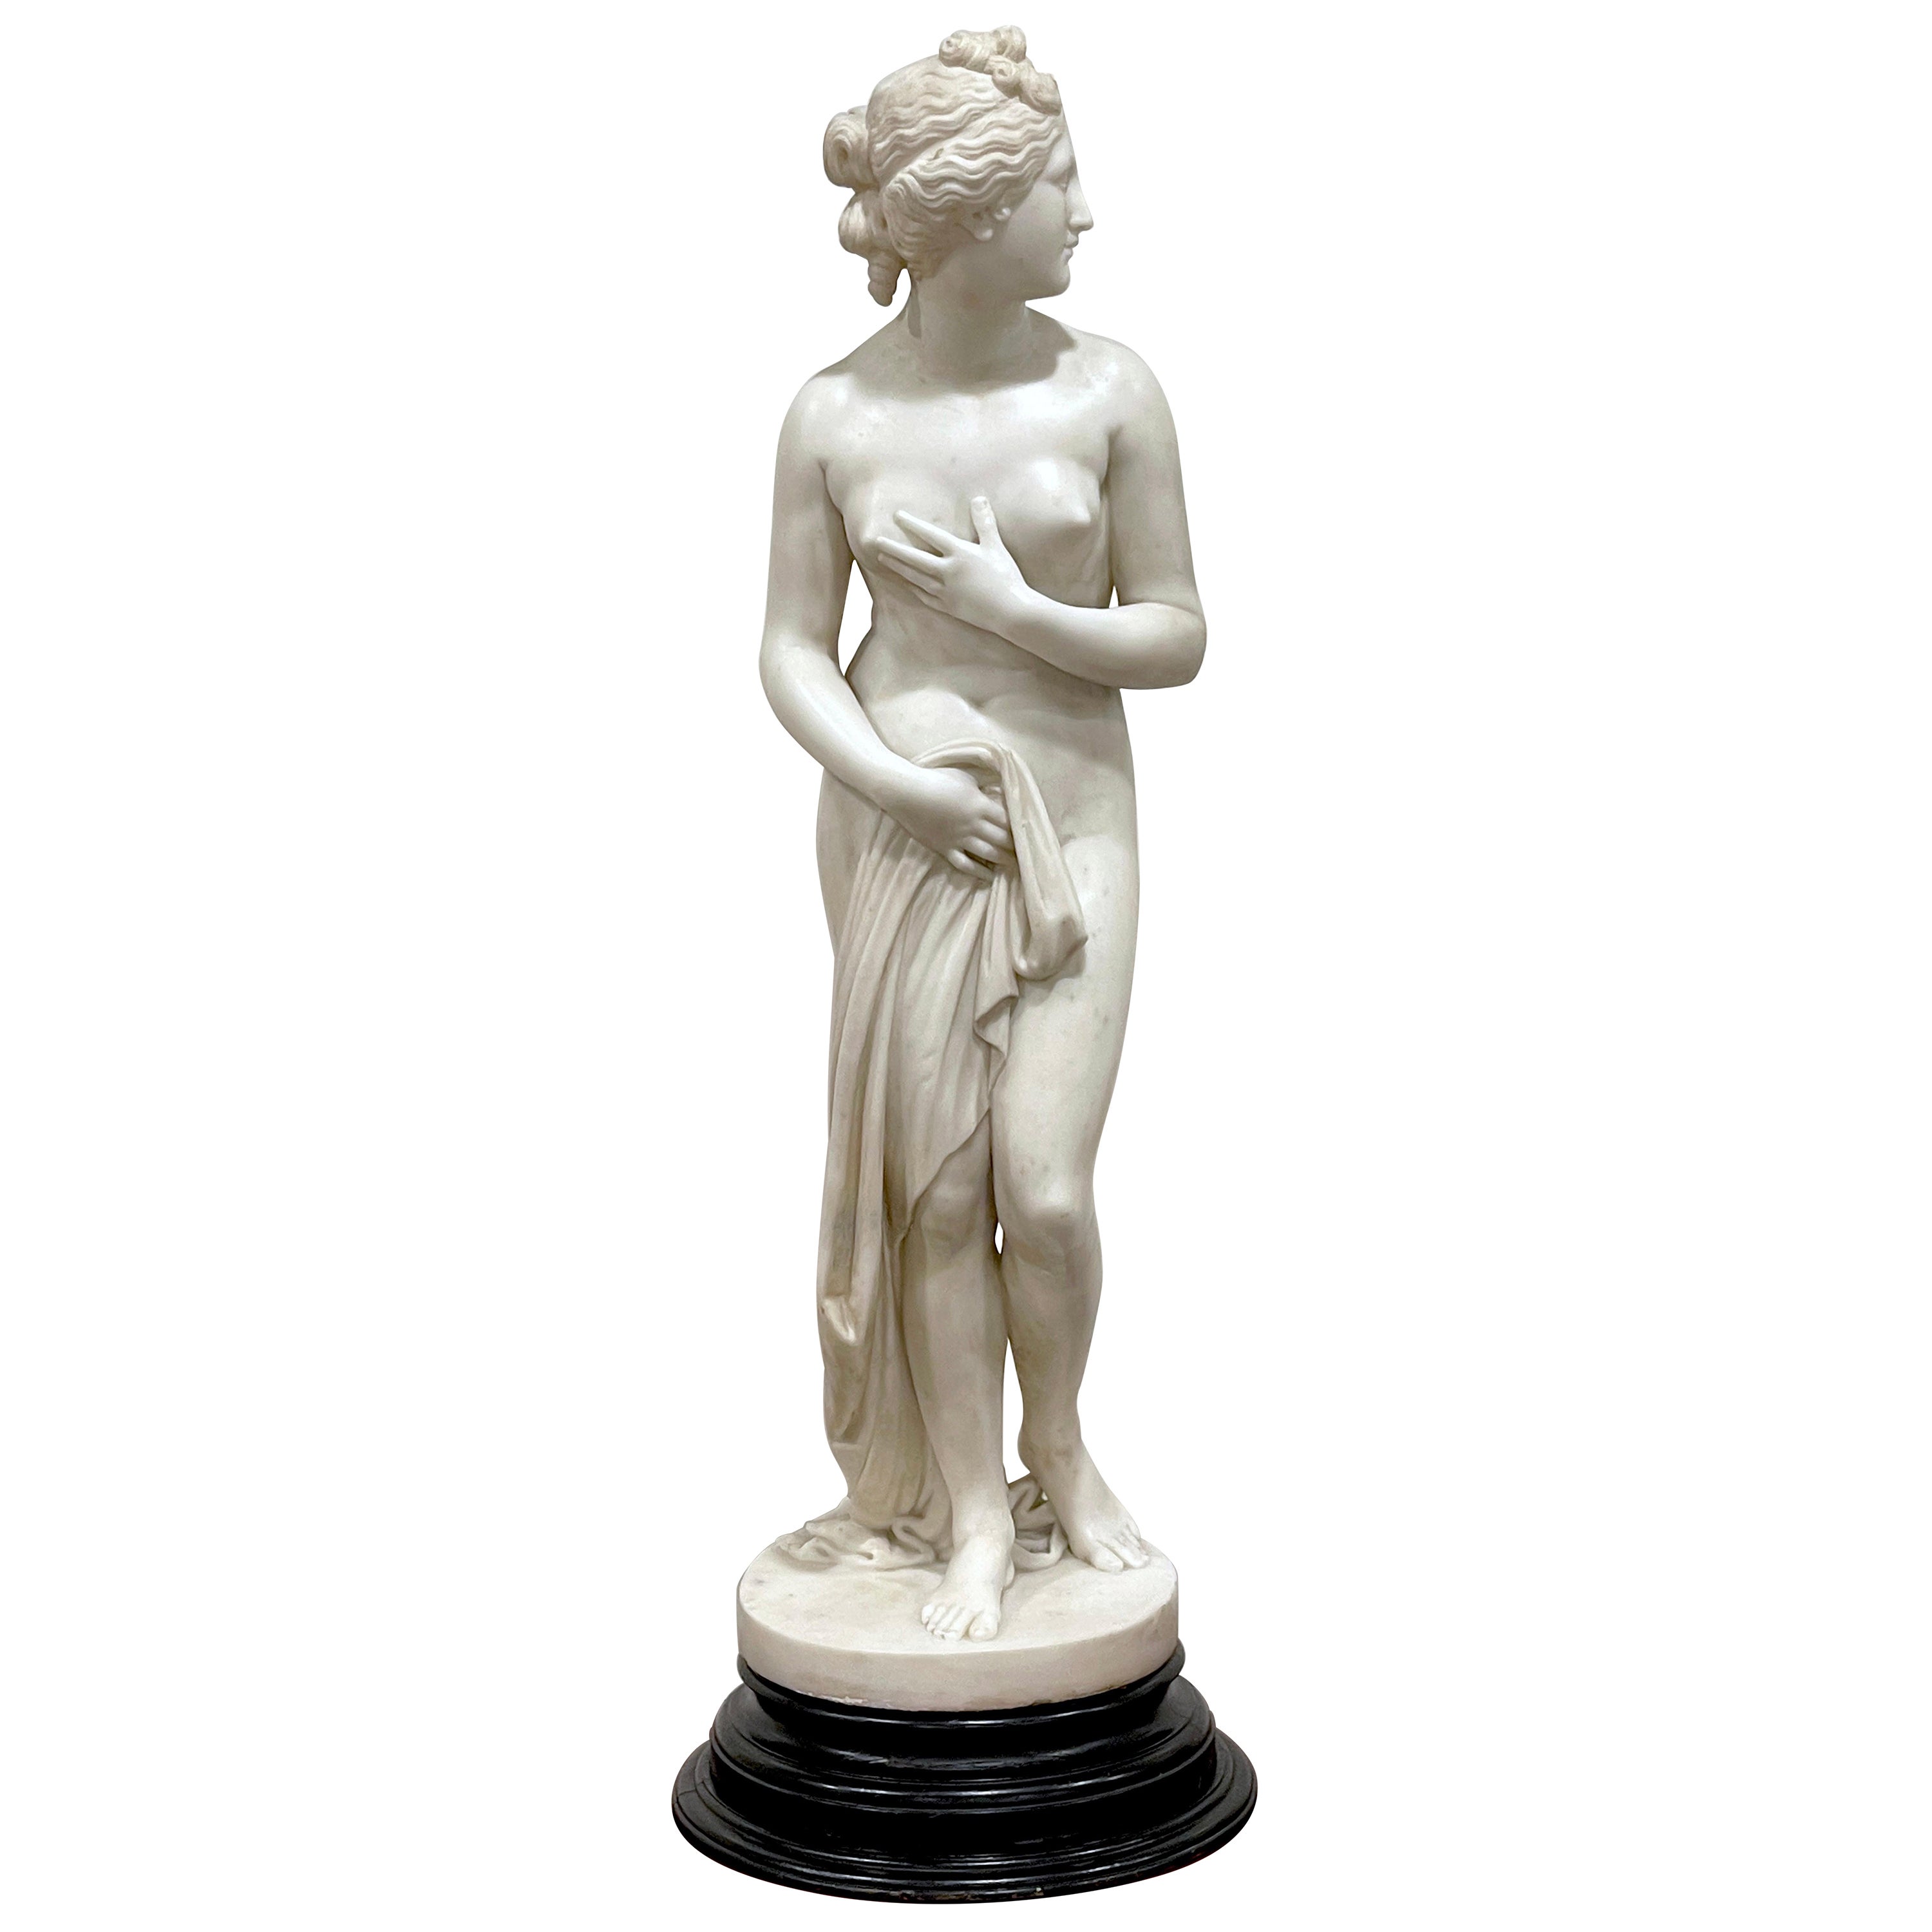 19th Century Carrera Marble Garden Sculpture, 'Venus Italica', After Canova